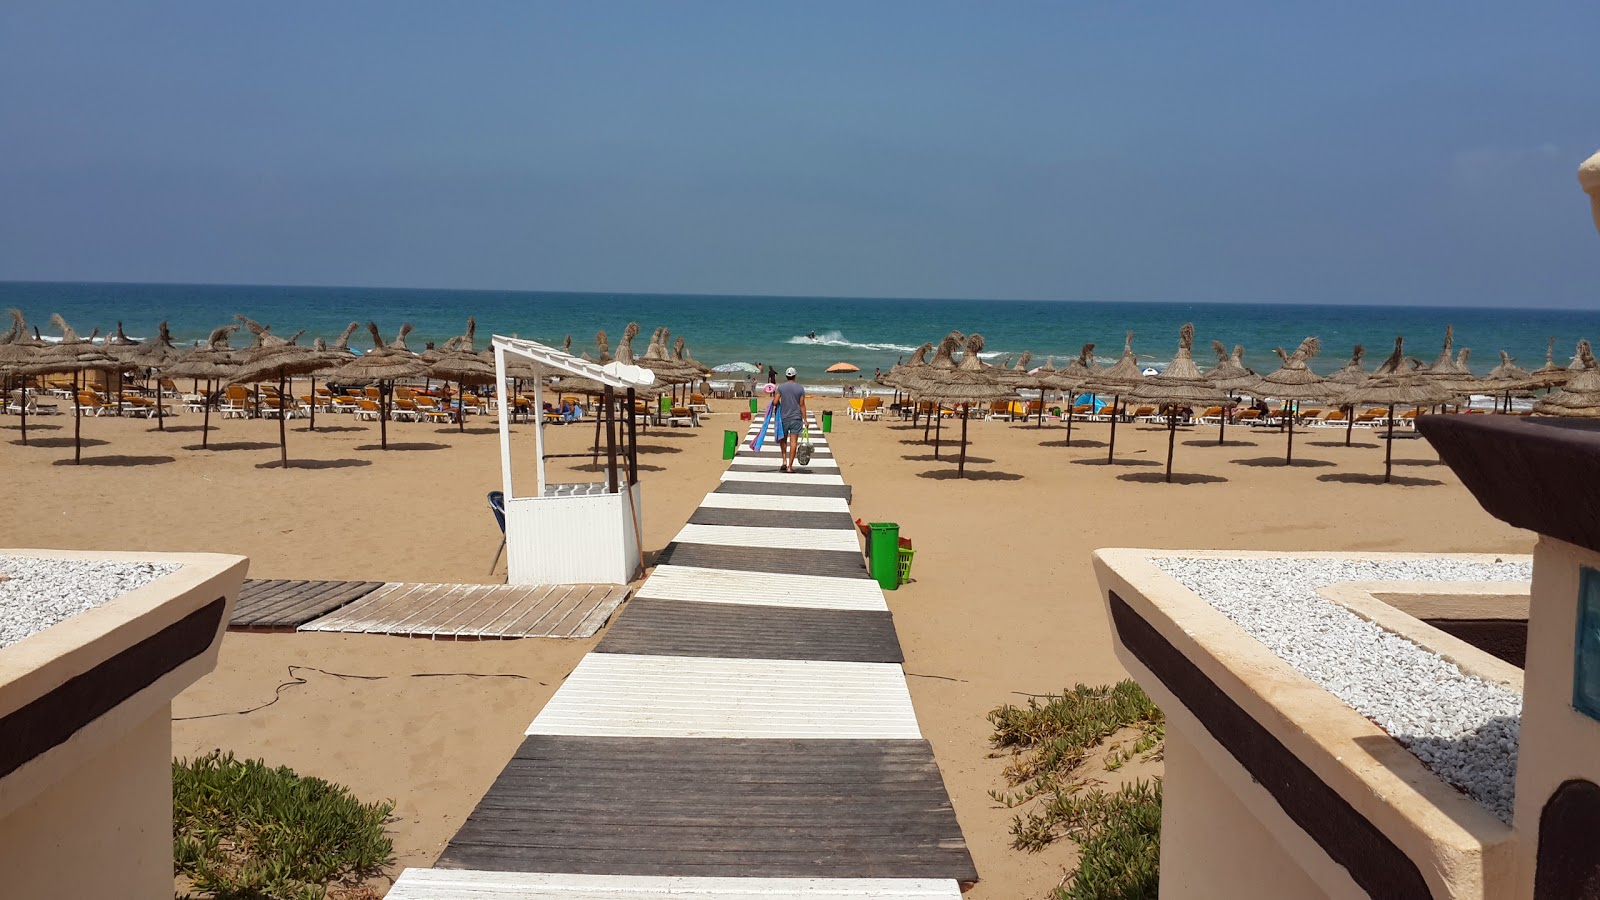 Foto de Saidia beach - recomendado para viajeros en familia con niños